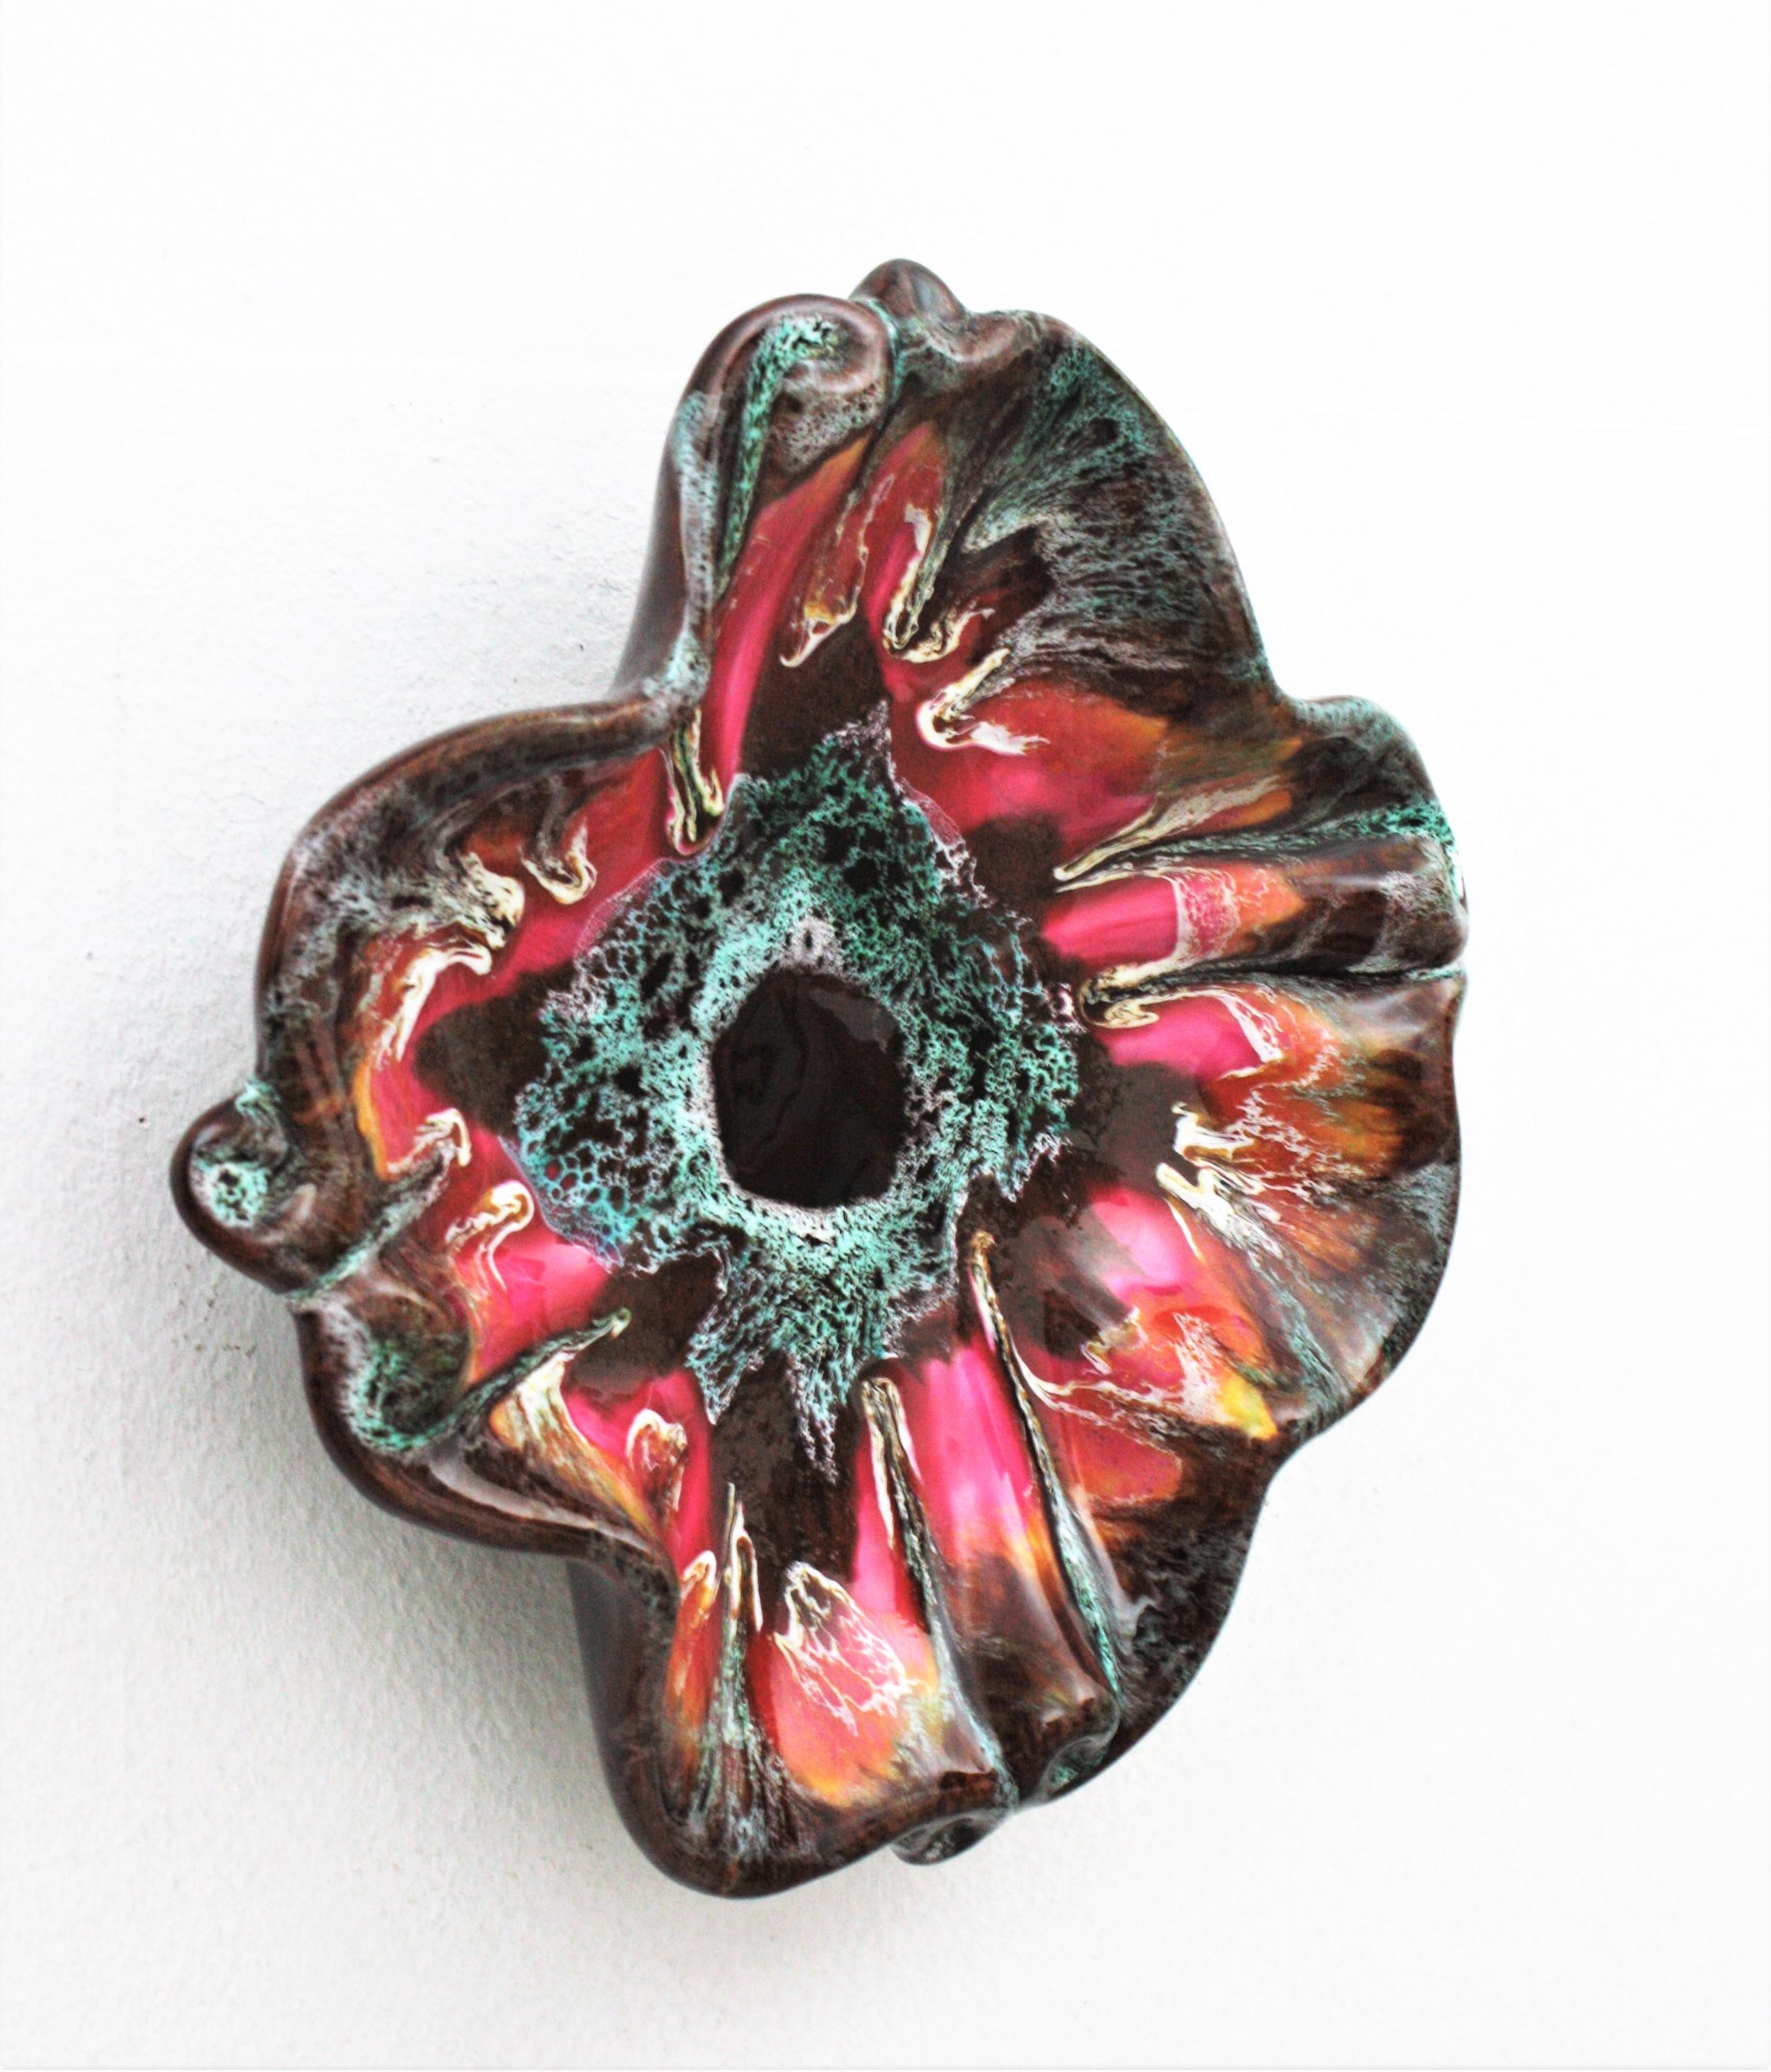 Vallauris Glazed Ceramic Platter or Centerpiece Bowl, Flower Shape For Sale 7